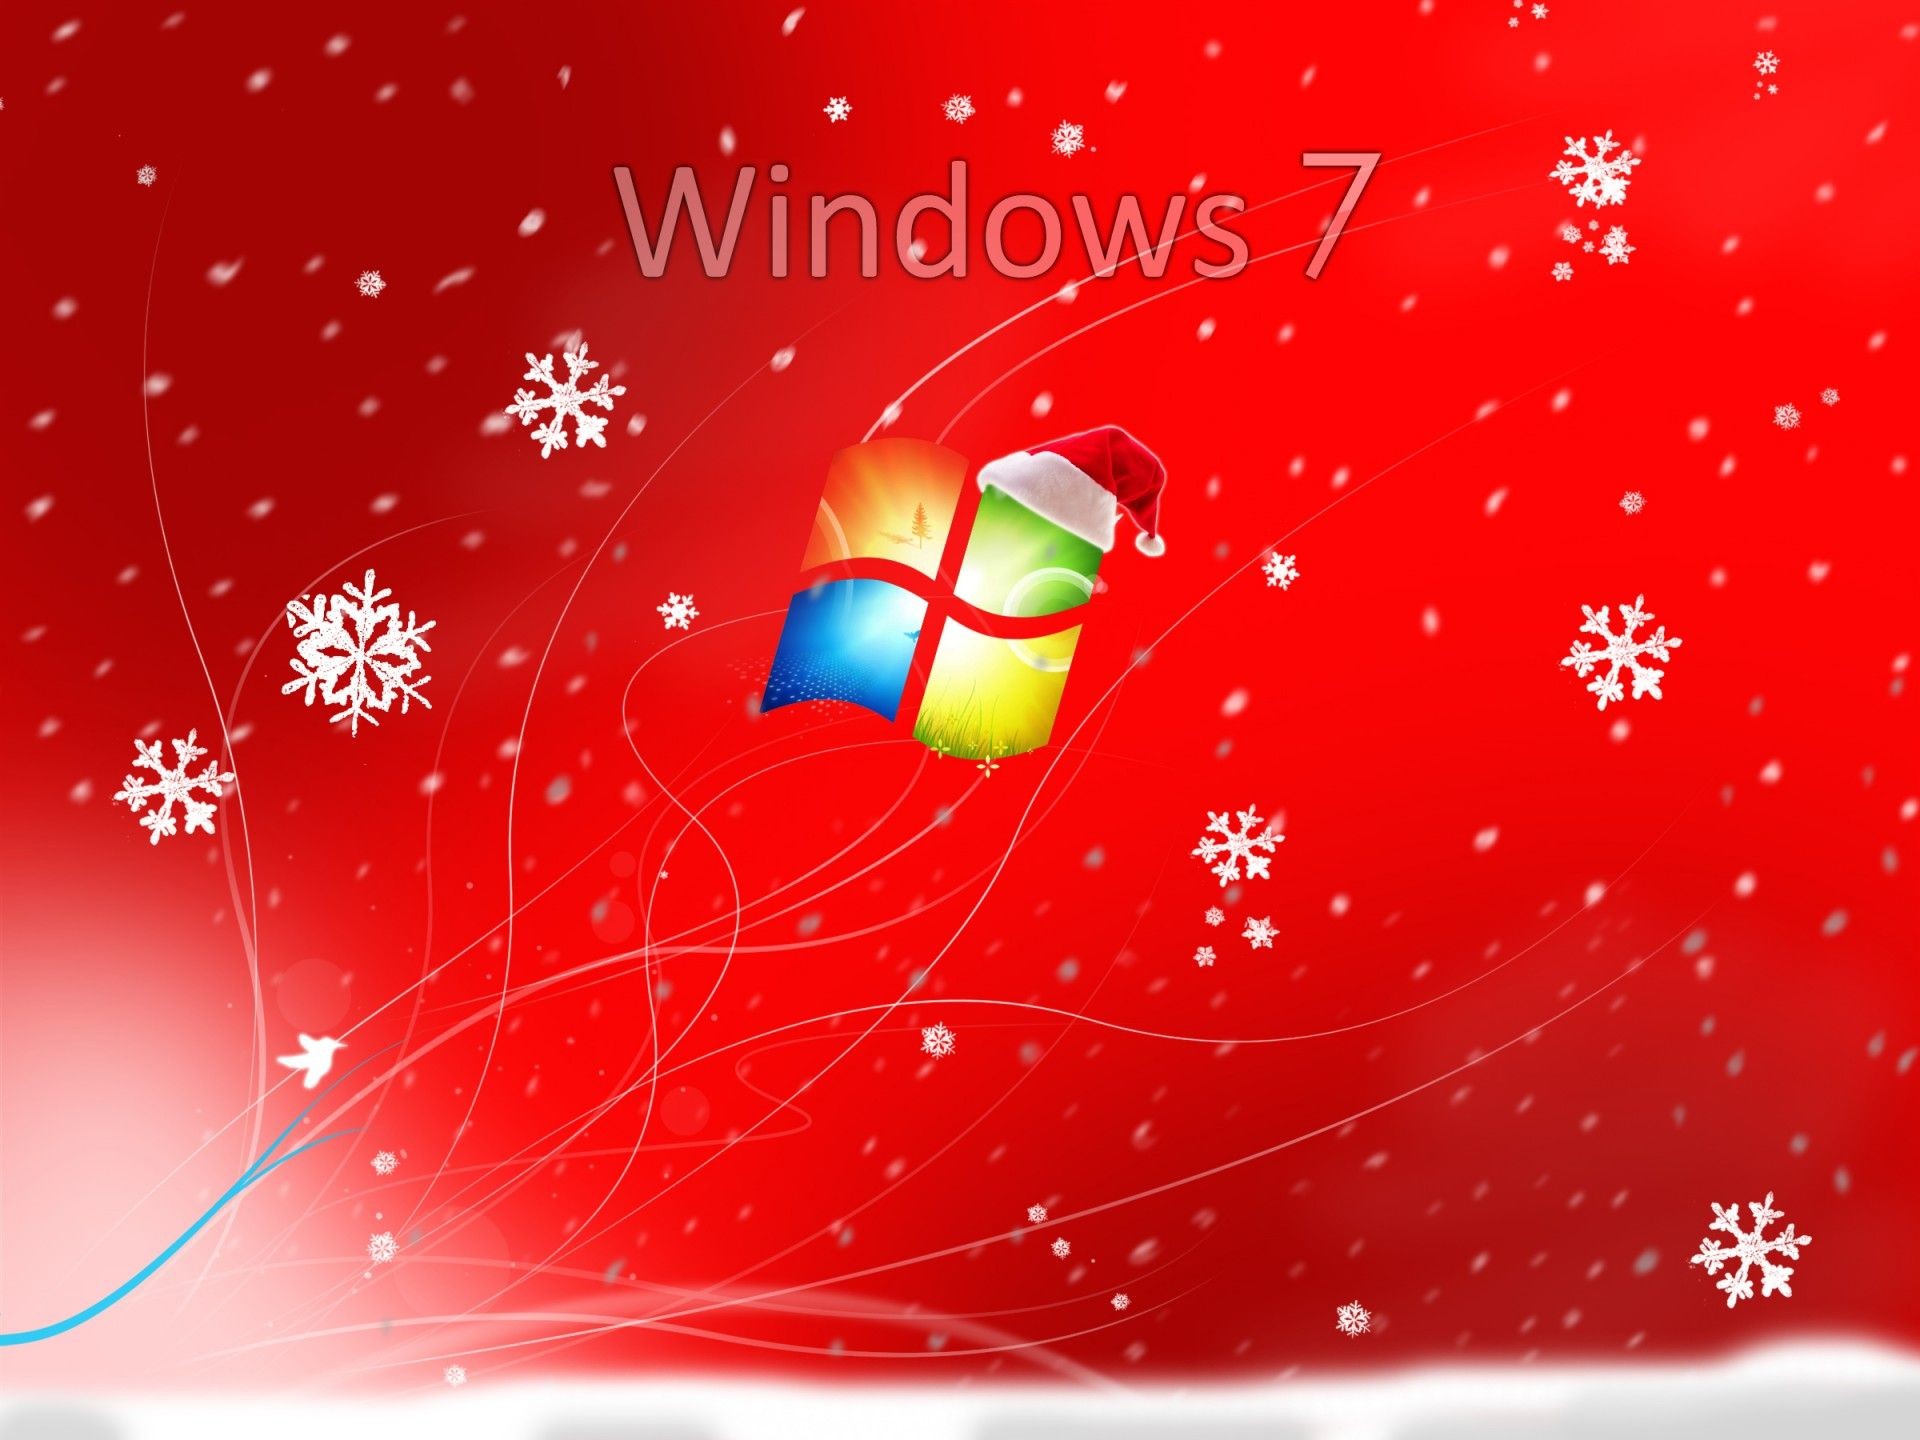 Windows Xmas Wallpaper Image